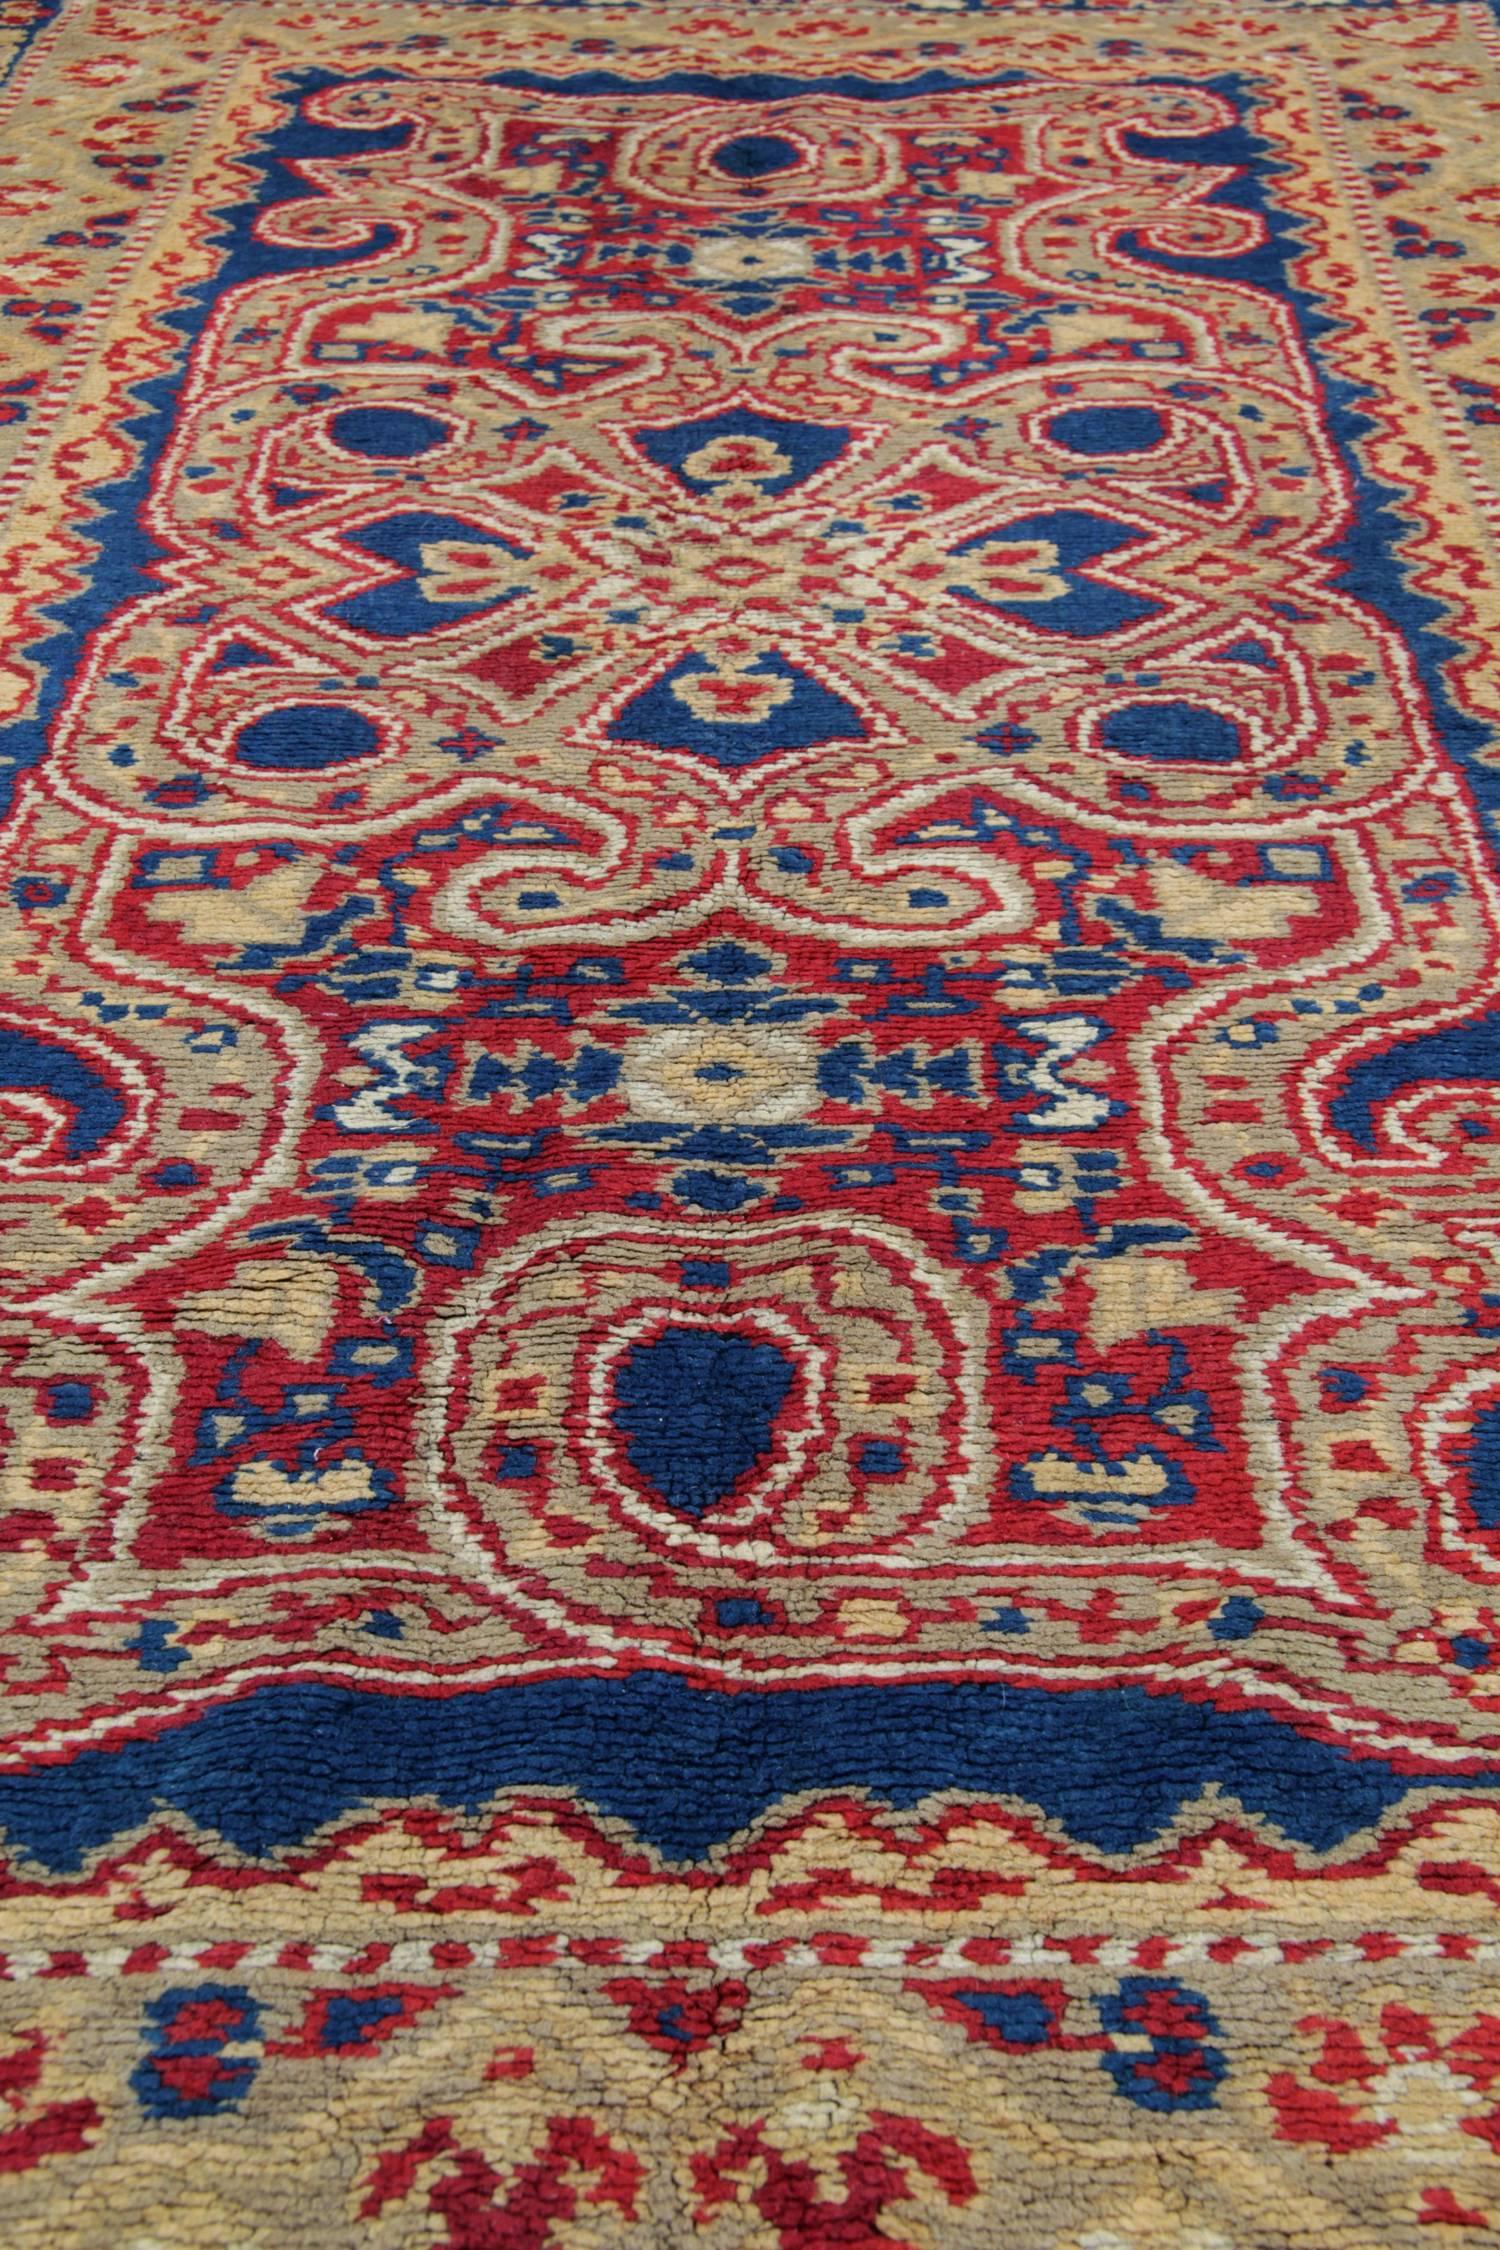 art deco style rugs uk